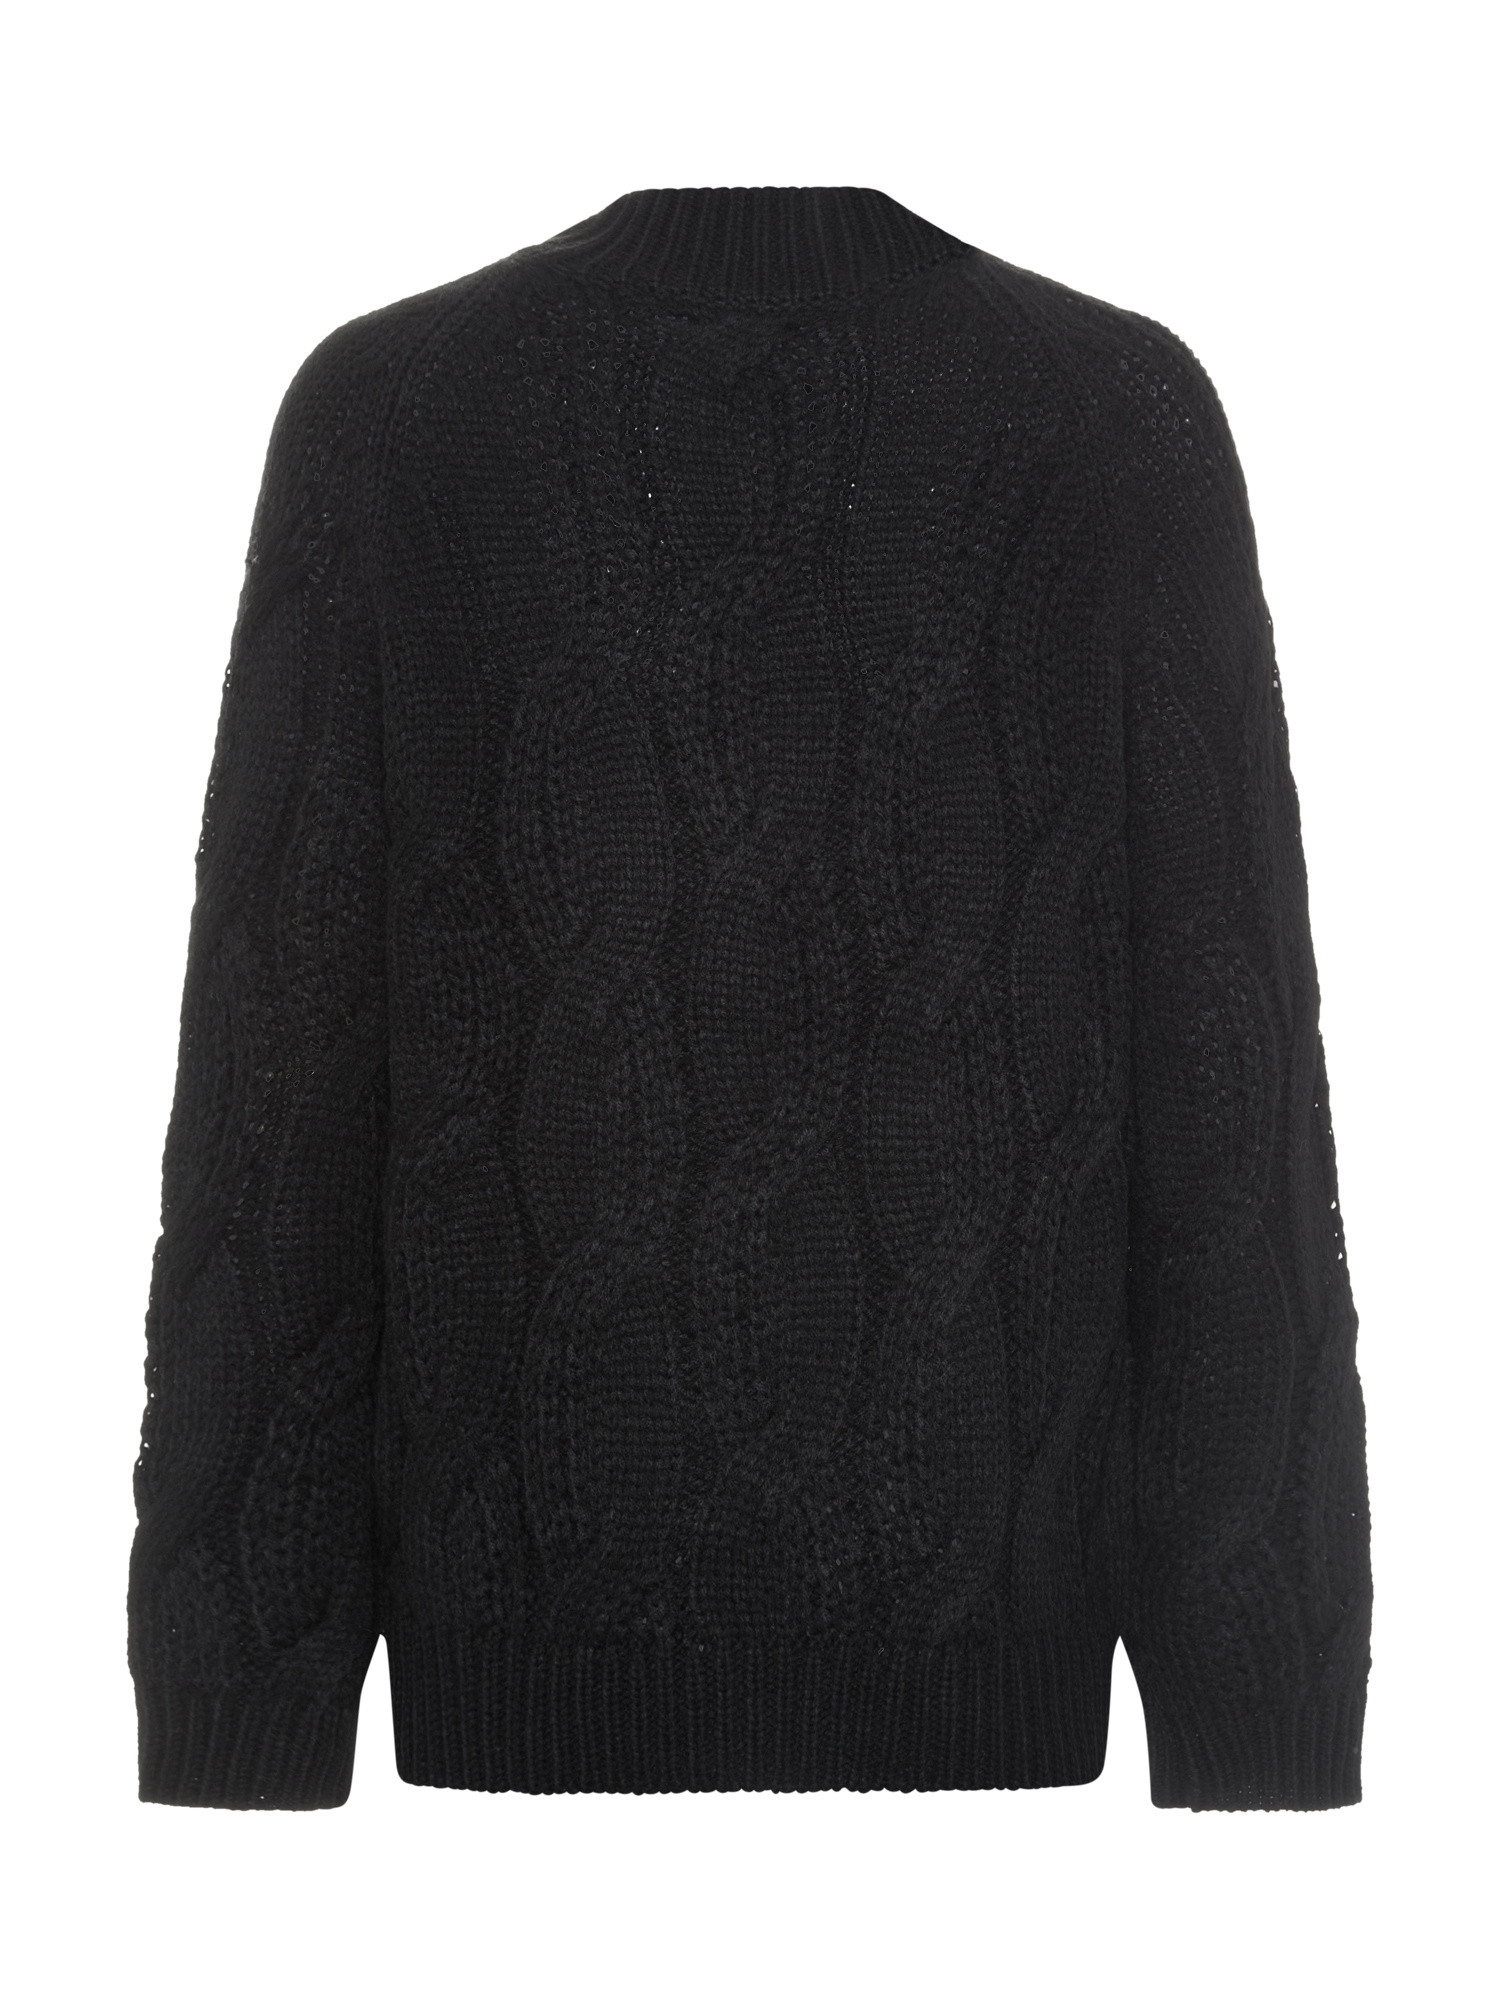 Koan - Crewneck sweater with braid motif, Black, large image number 1